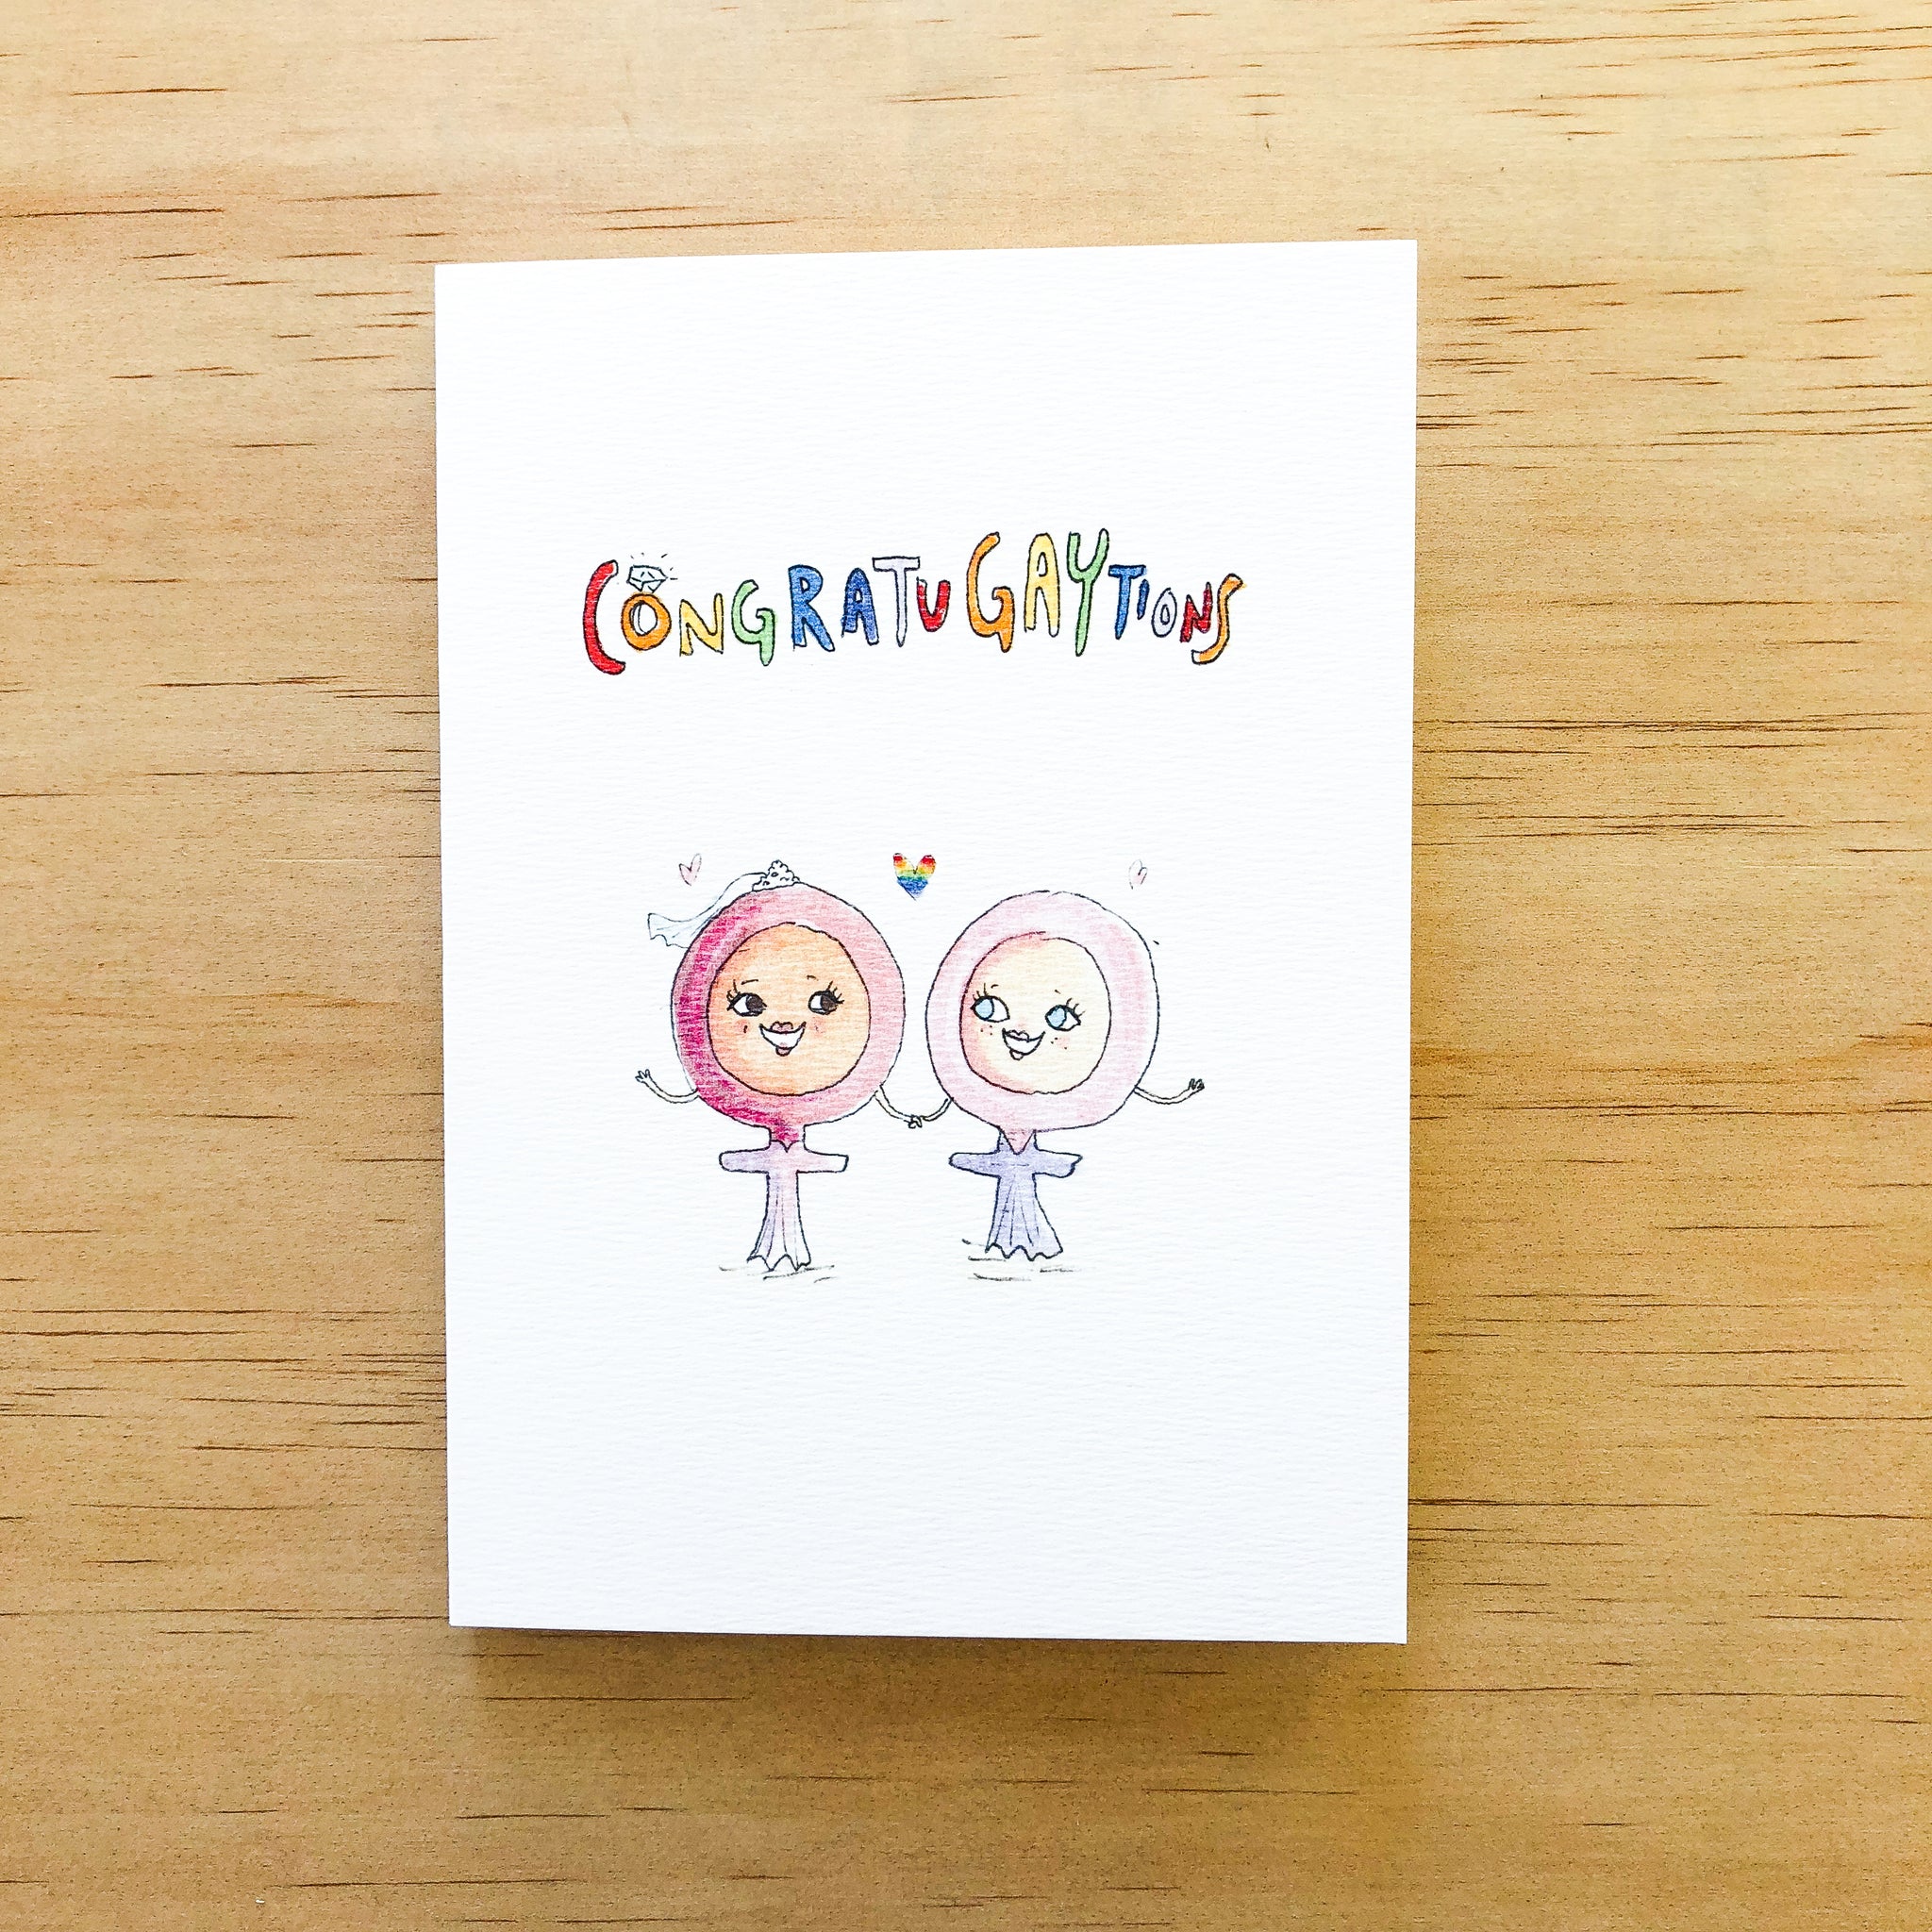 Congratugaytions - Female | Greeting Wishing Card | Hand-made Card